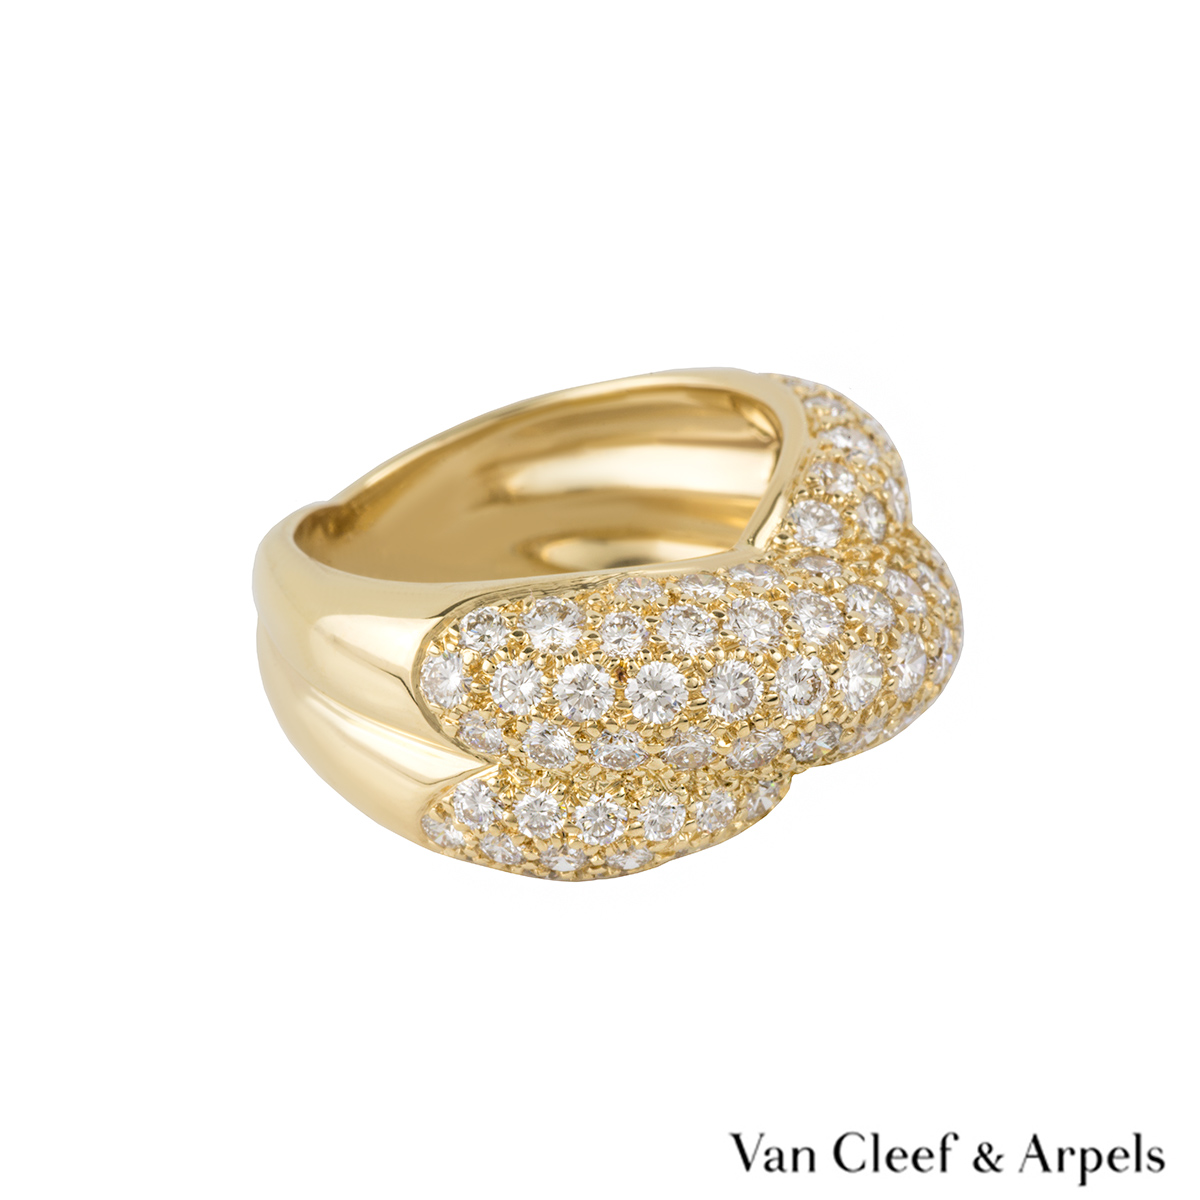 Van Cleef & Arpels 18k Yellow Gold Diamond Set Dress Ring | Rich Diamonds